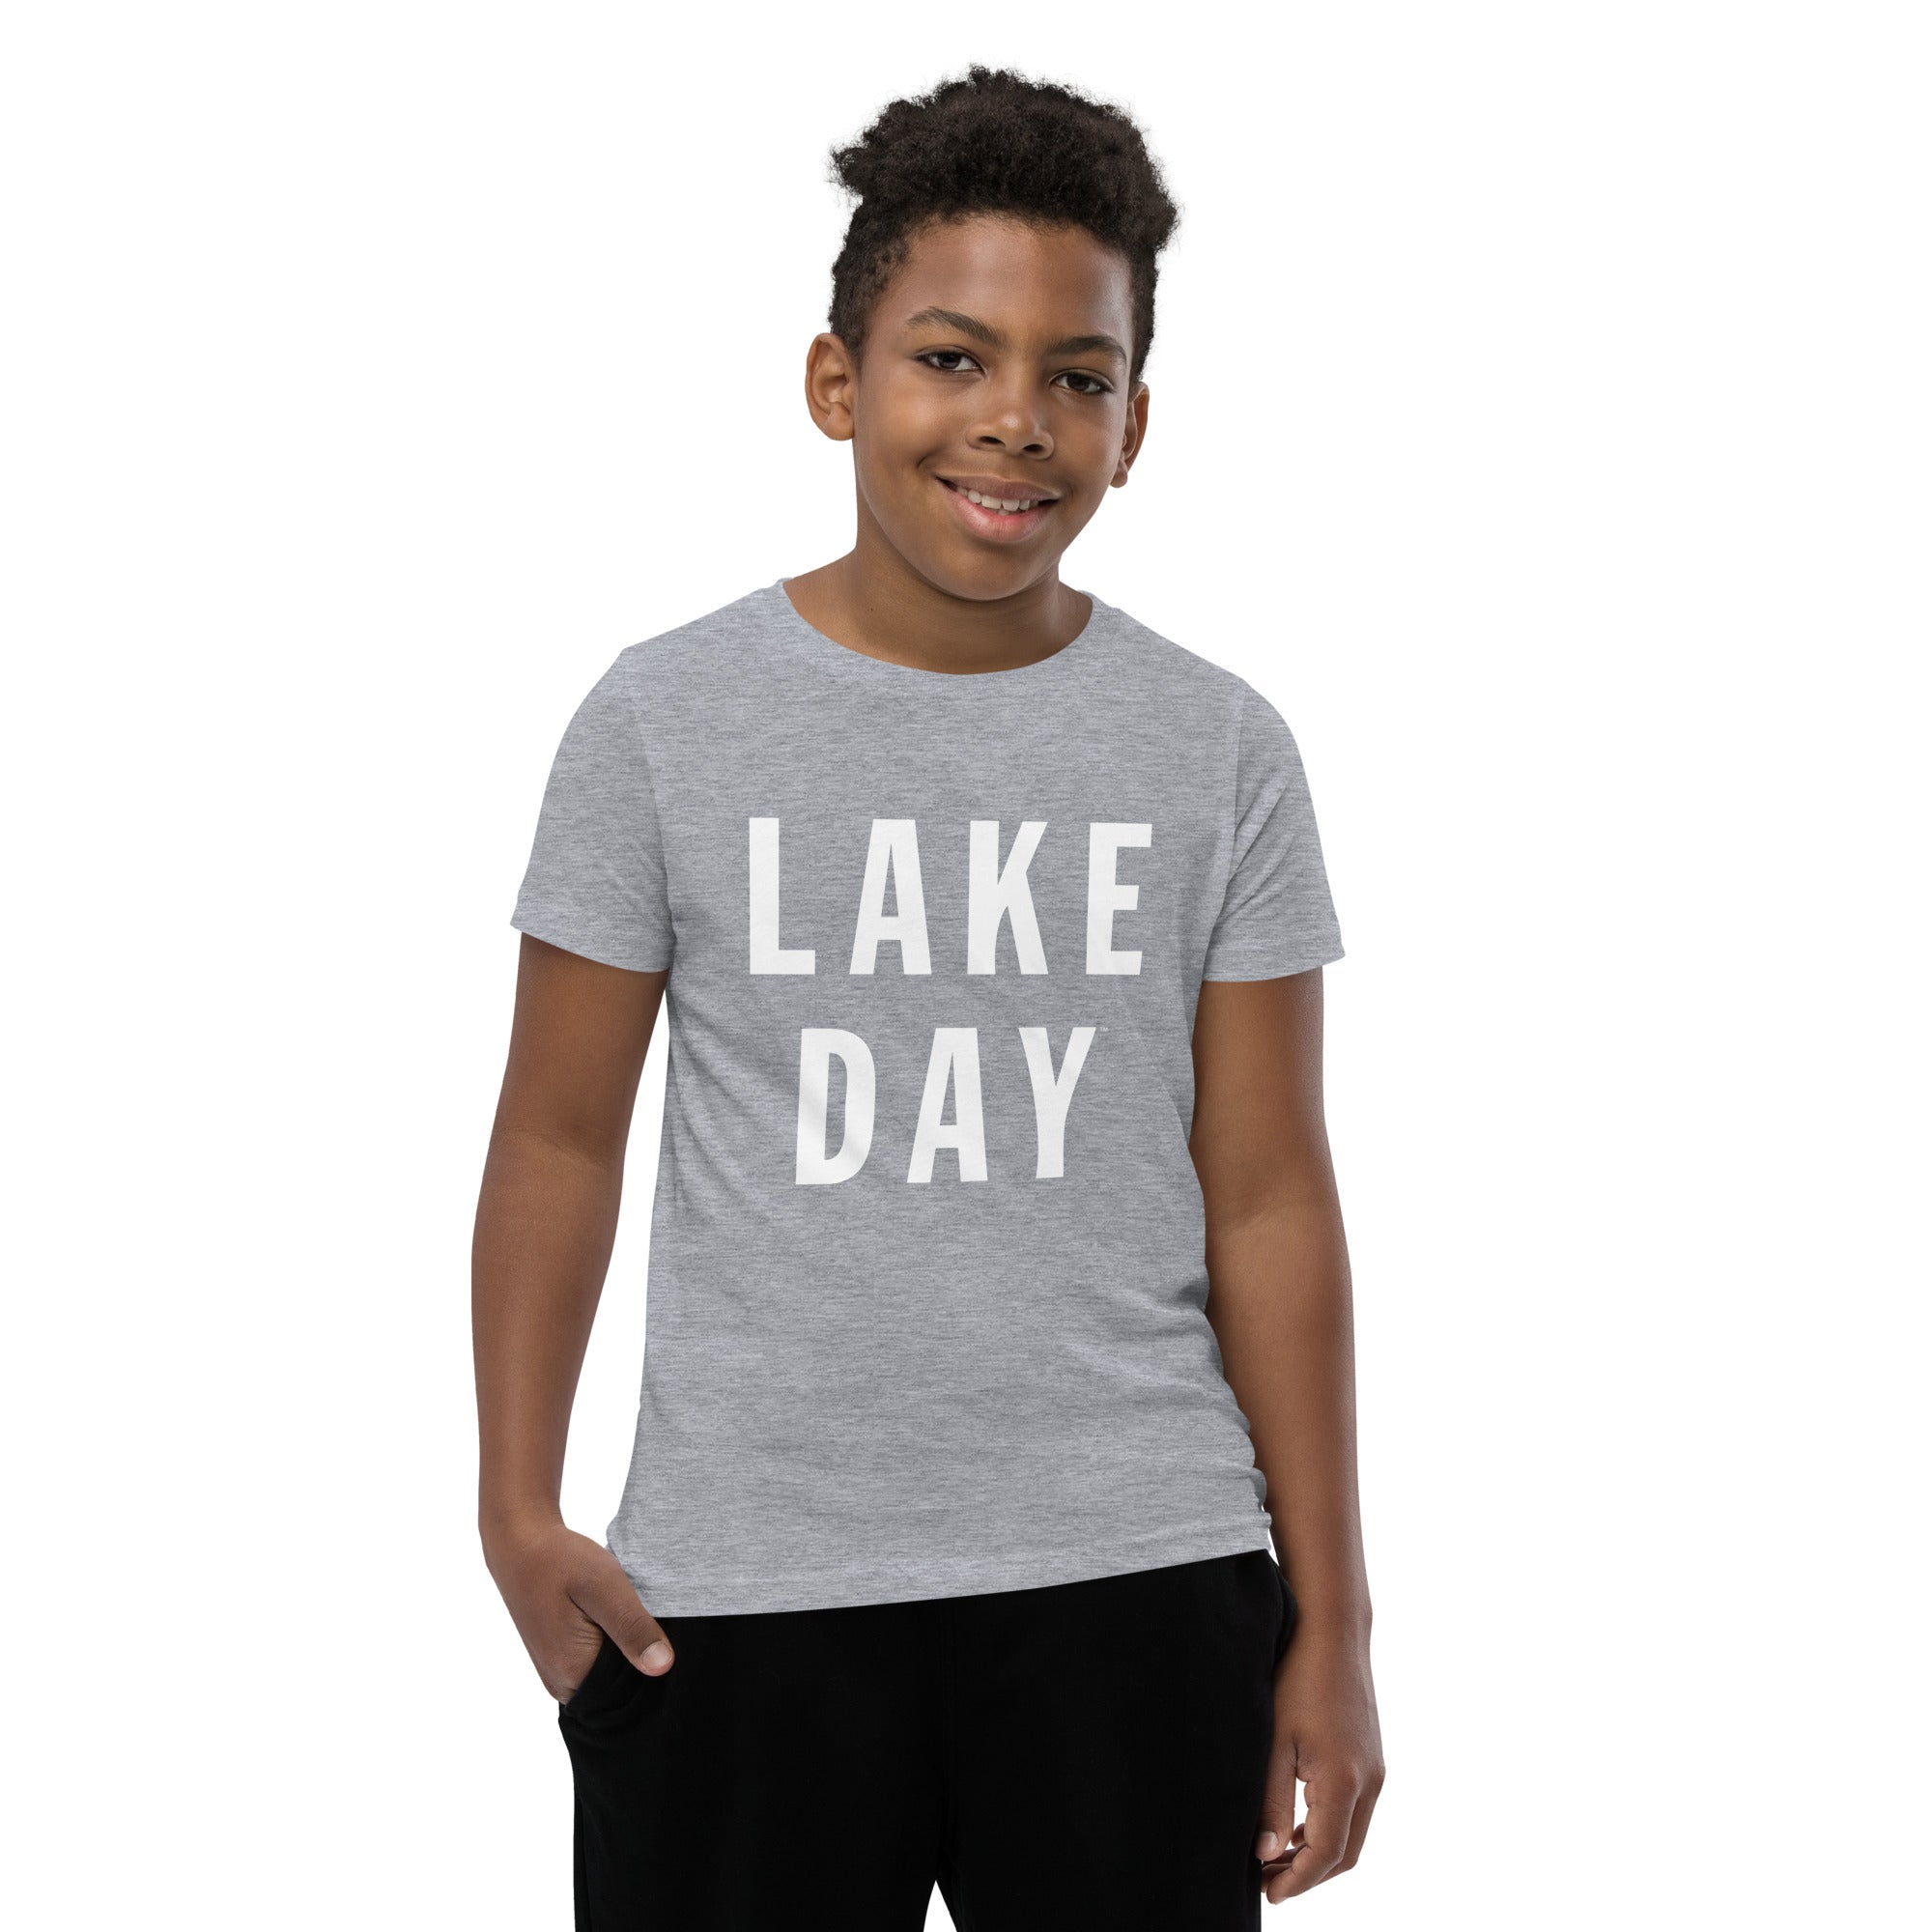 LAKE DAY Youth Short Sleeve T-Shirt